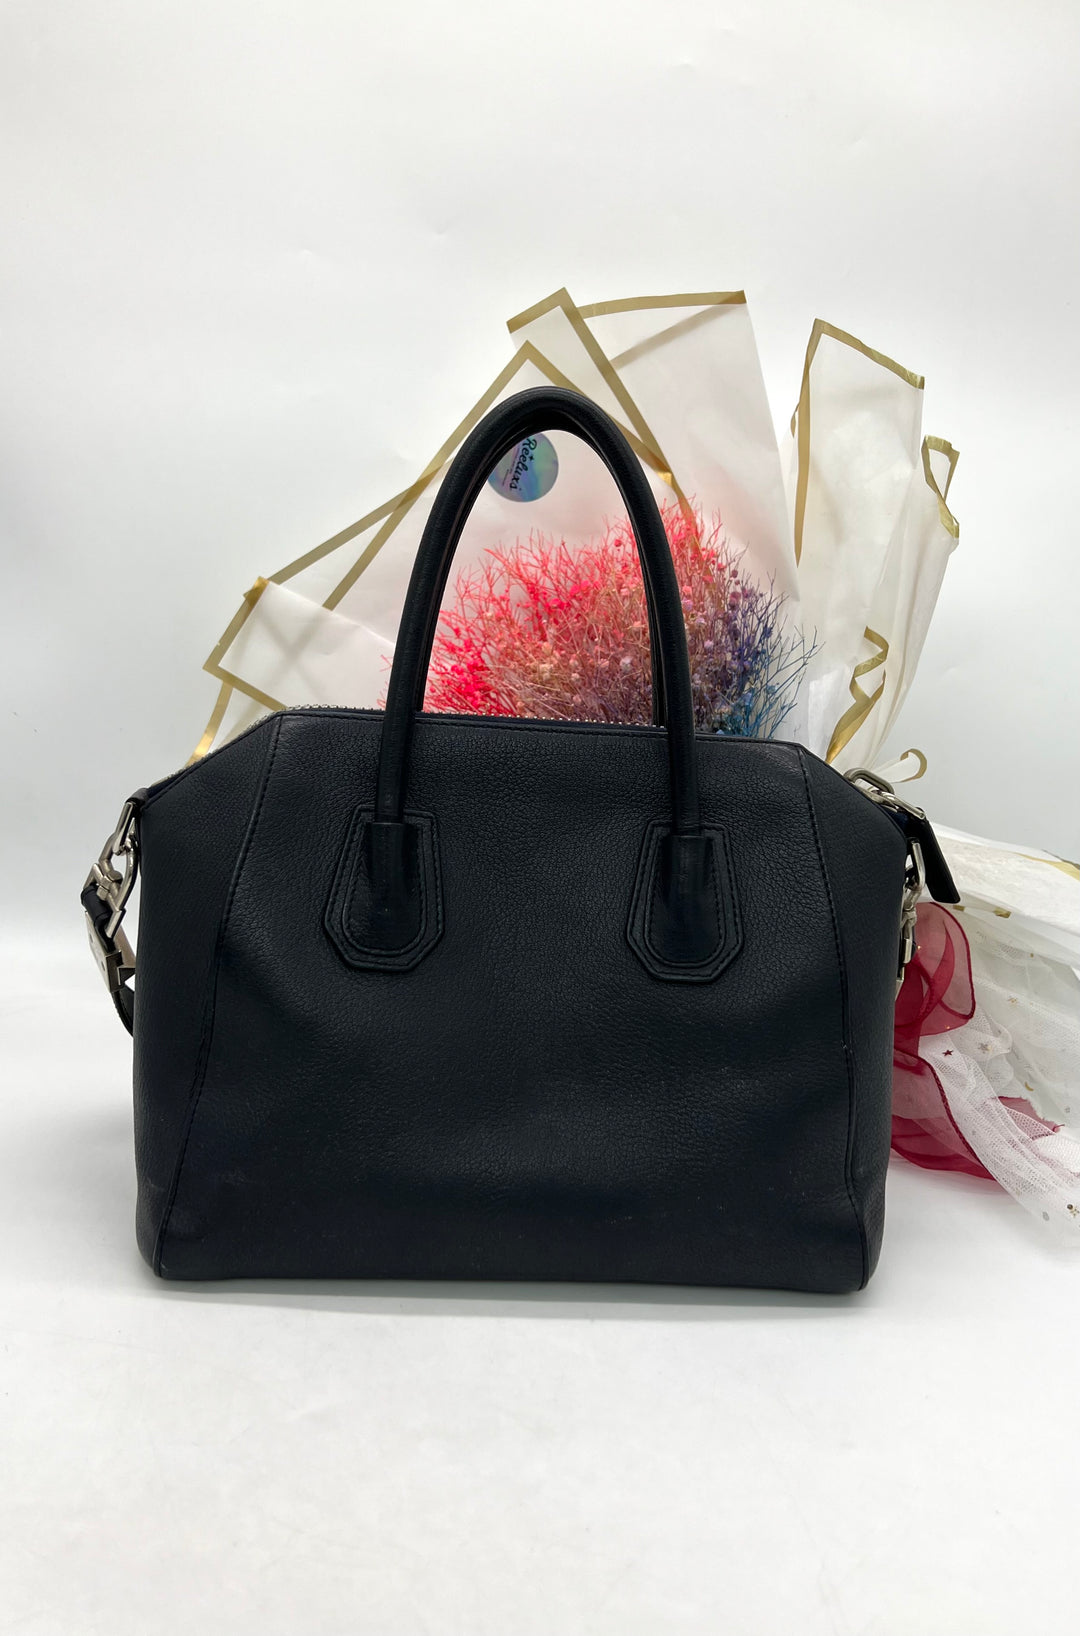 Givenchy Antigona Women's Black Shoulder Bag